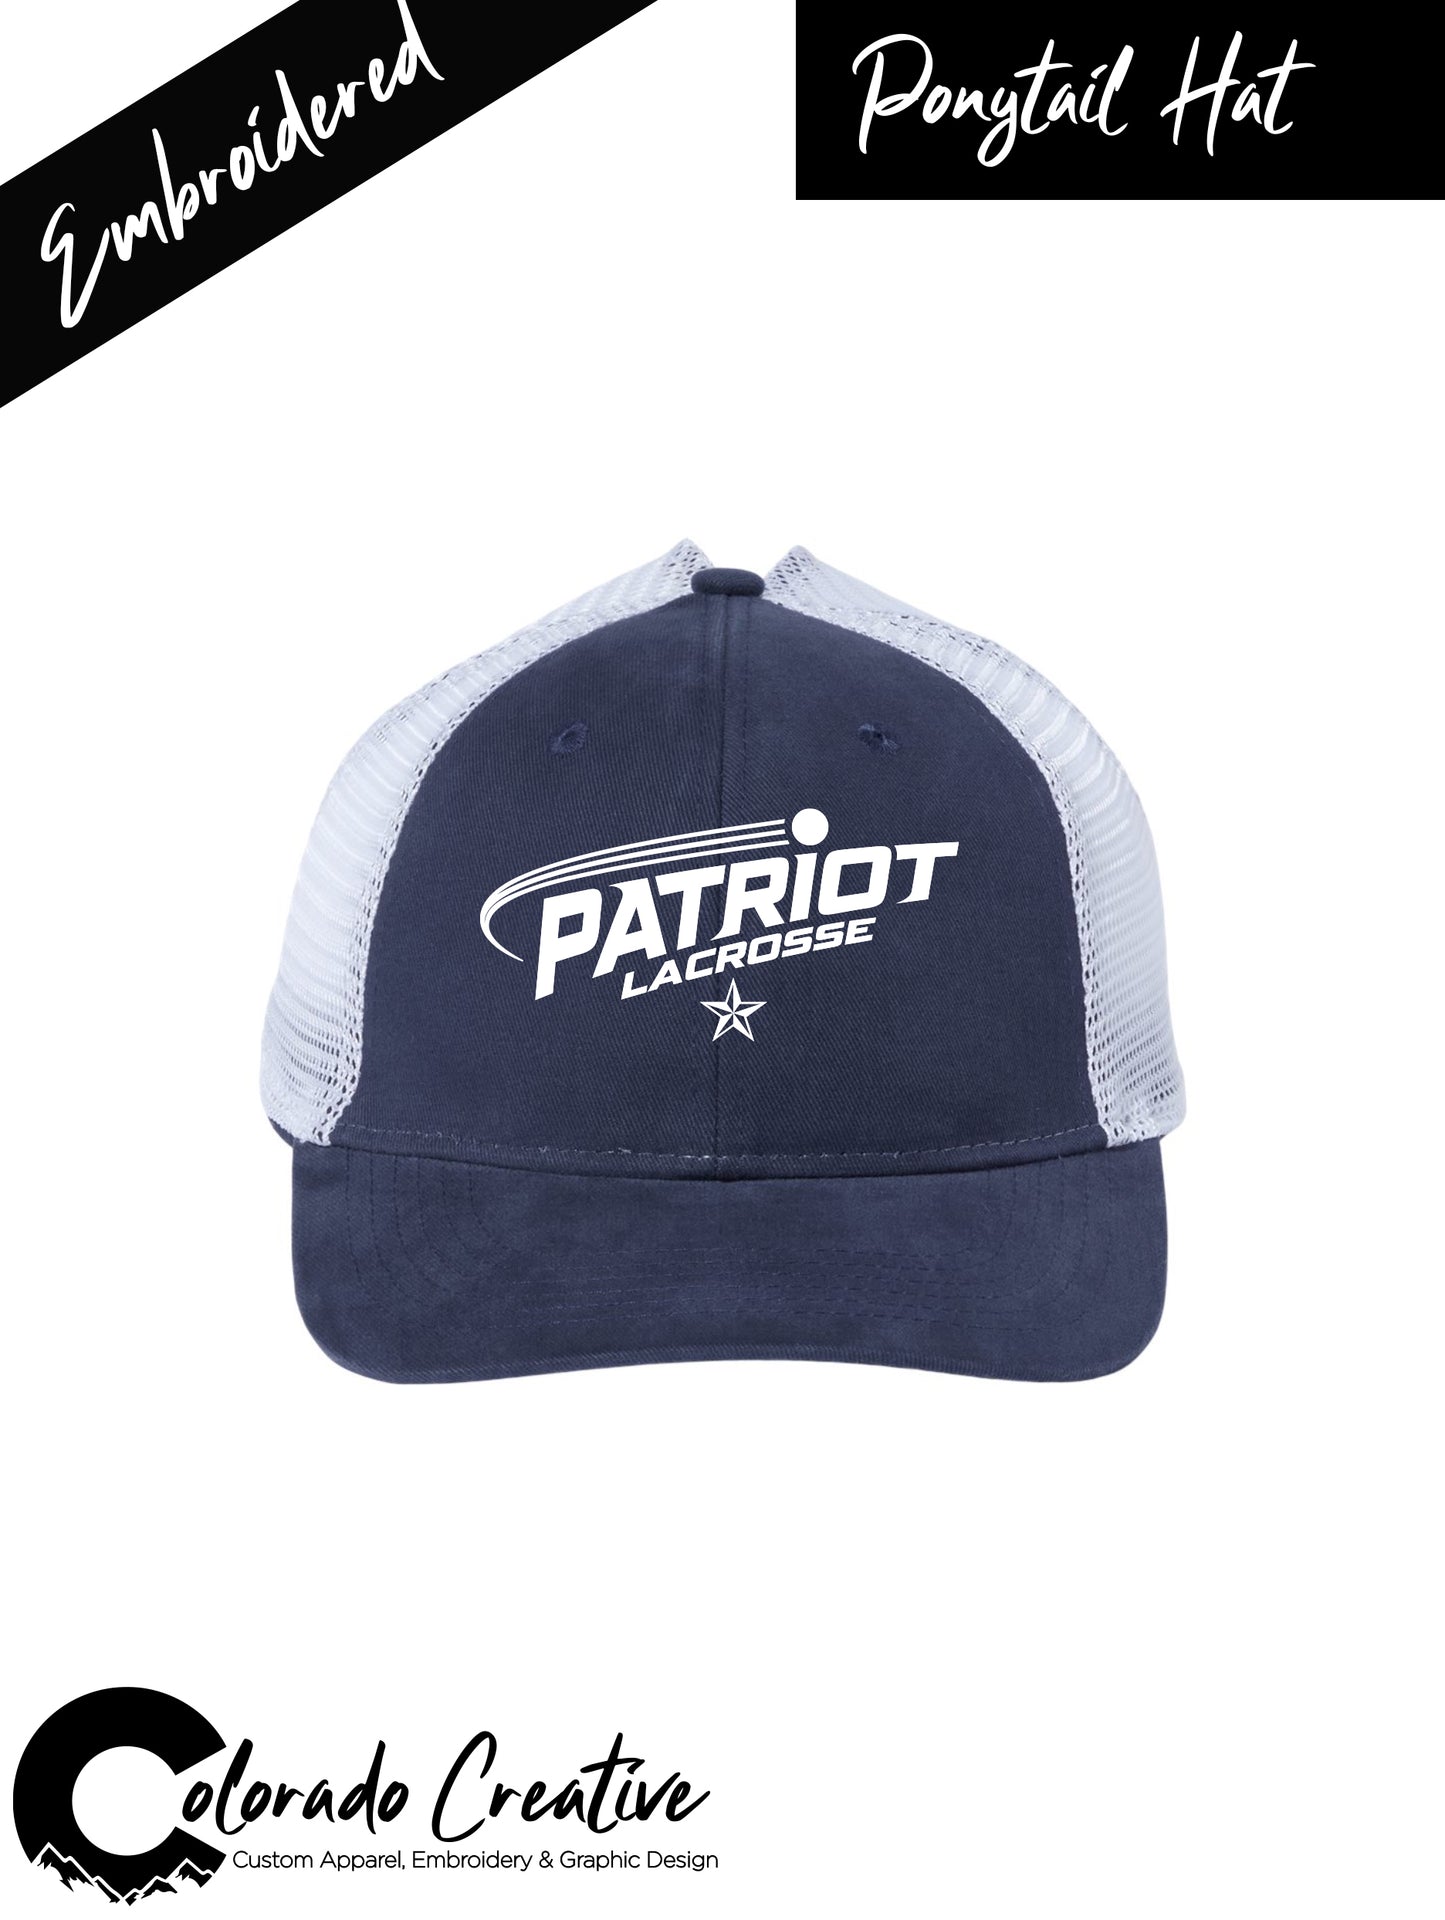 Patriots Women's Ponytail Cap